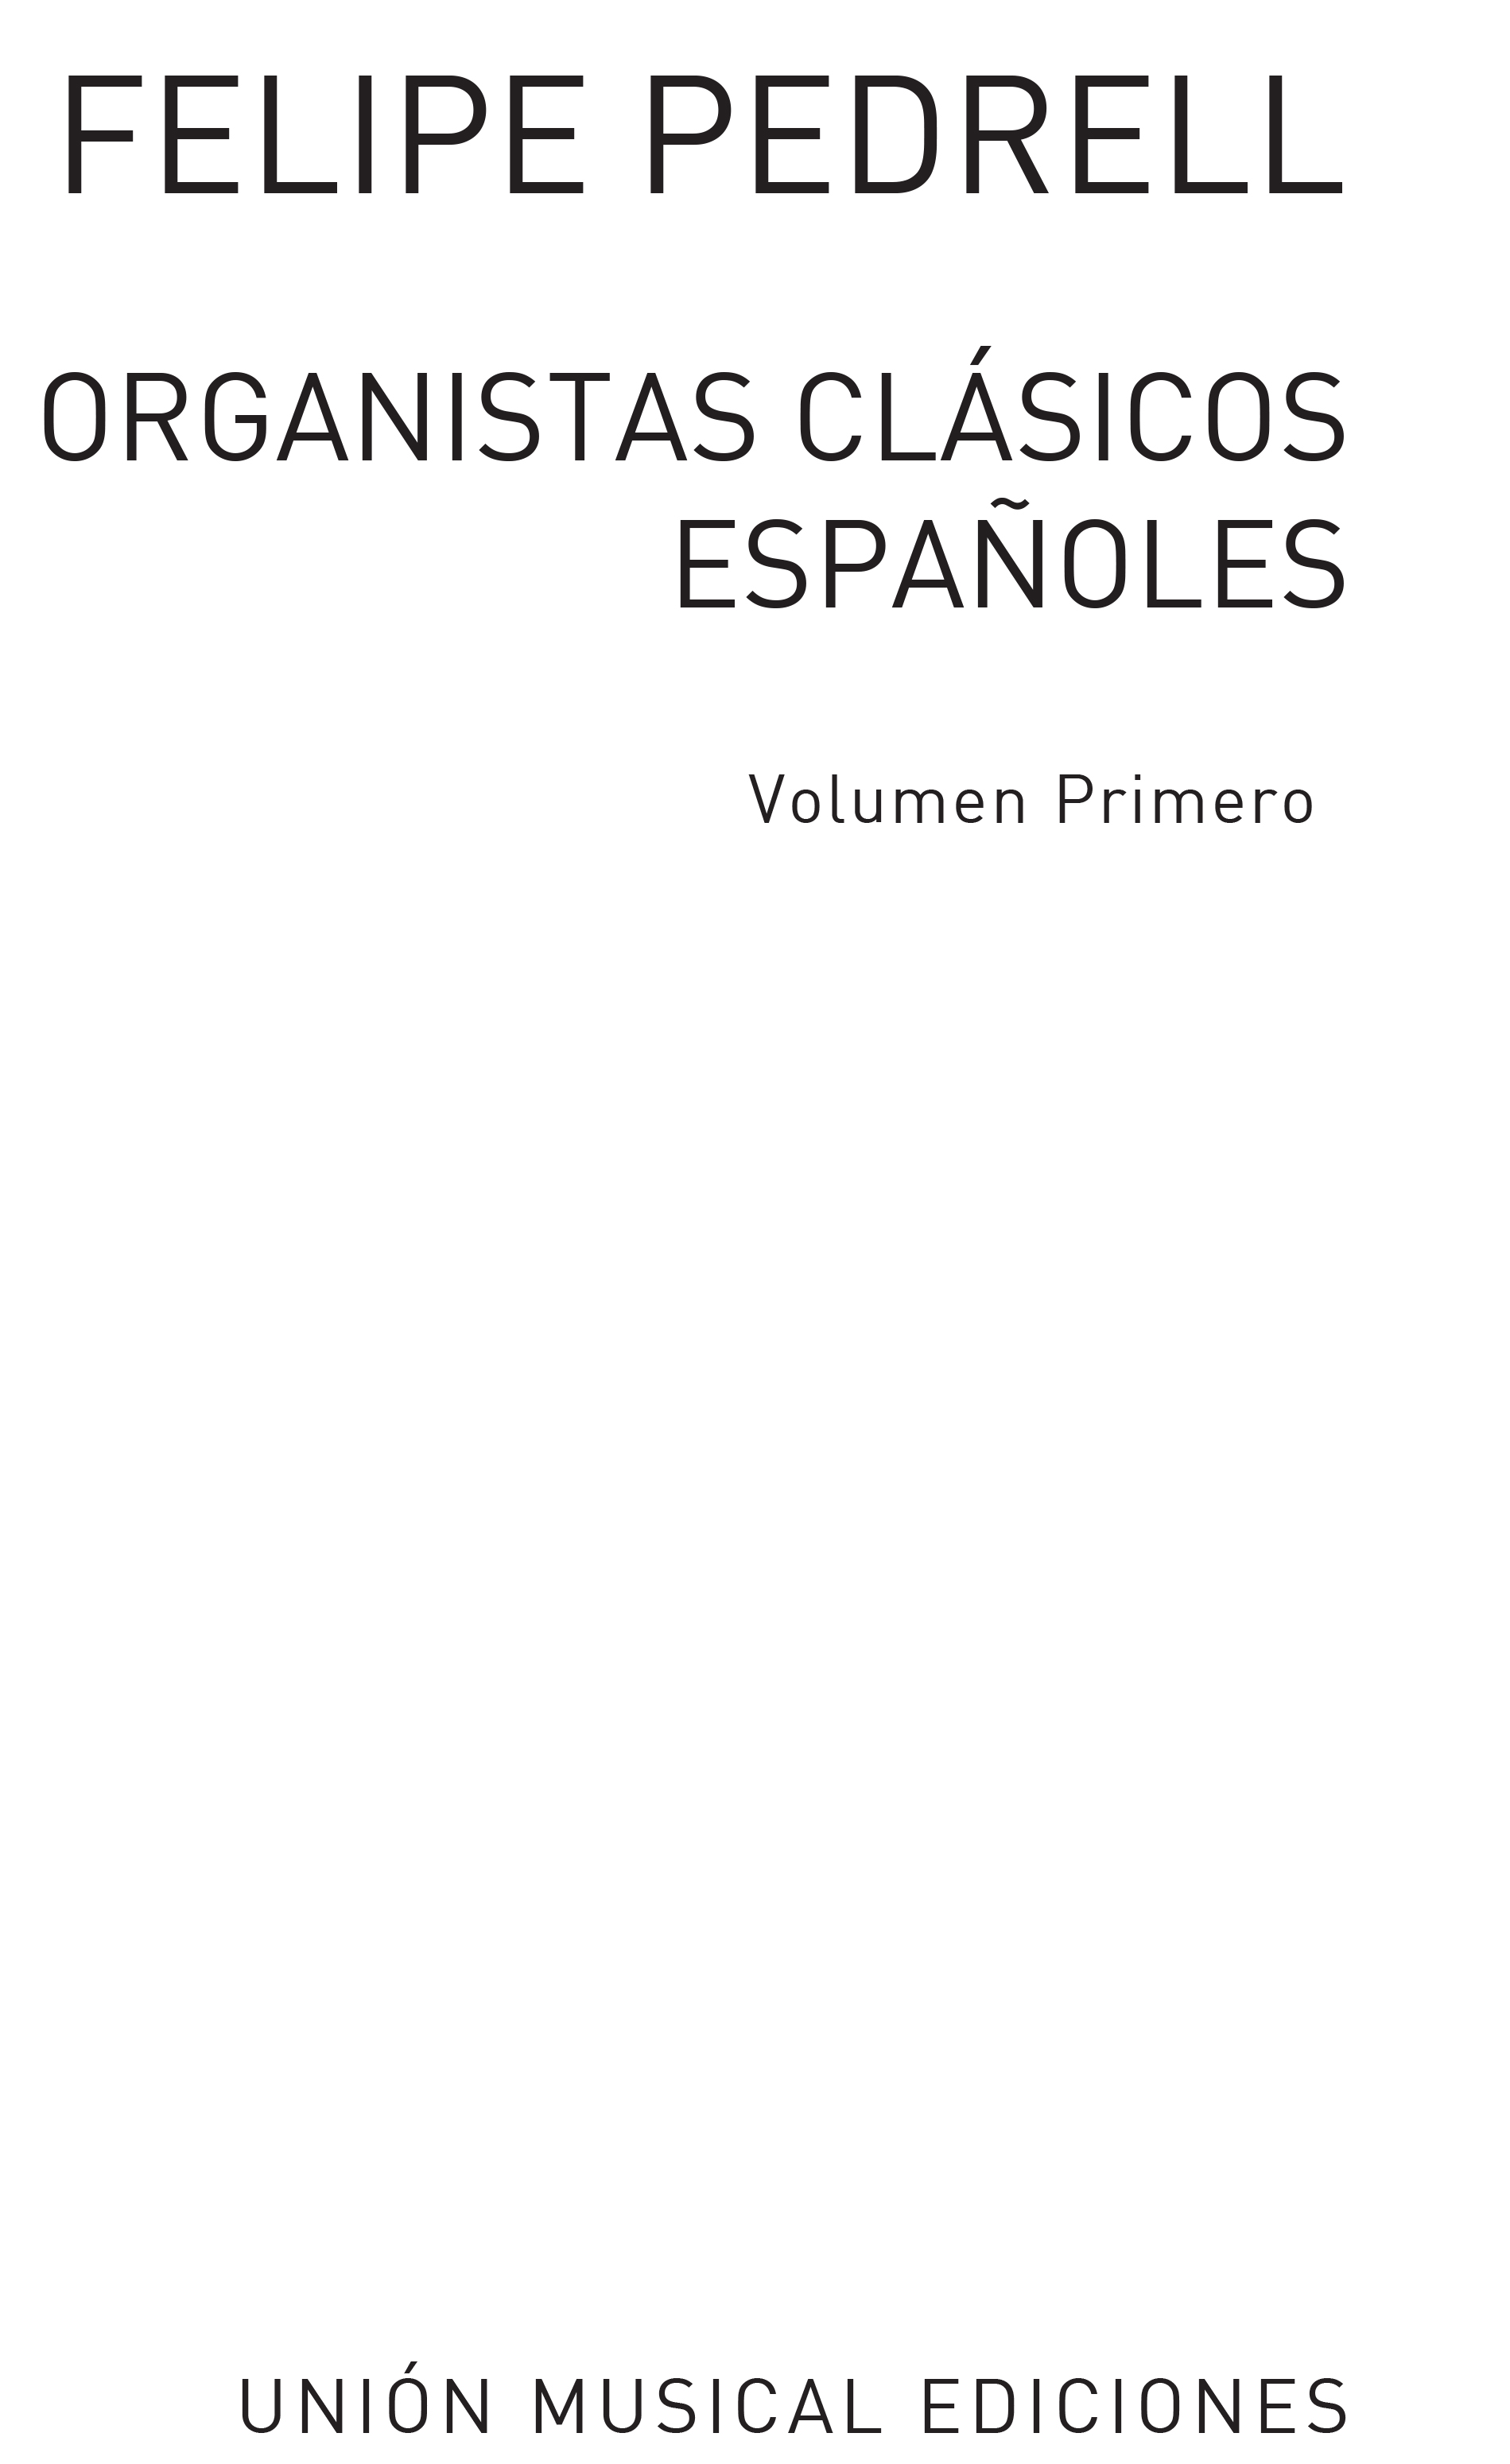 Felipe Pedrell: Antologia De Organistas Clasicos Vol.1: Organ: Instrumental Work